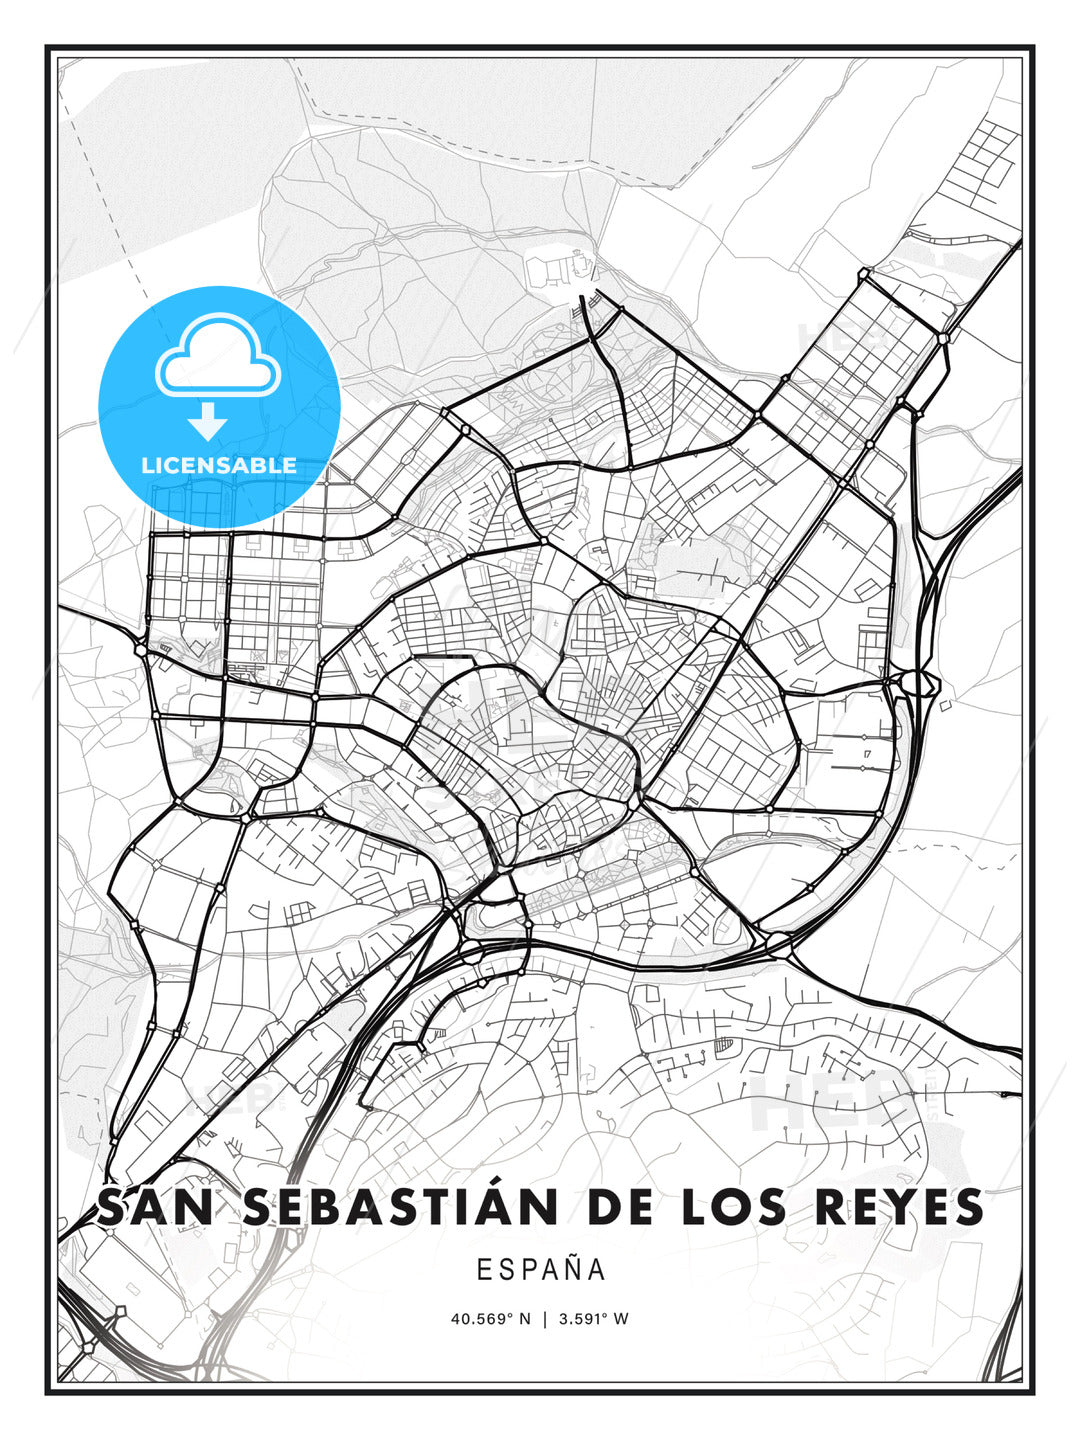 San Sebastián de los Reyes, Spain, Modern Print Template in Various Formats - HEBSTREITS Sketches